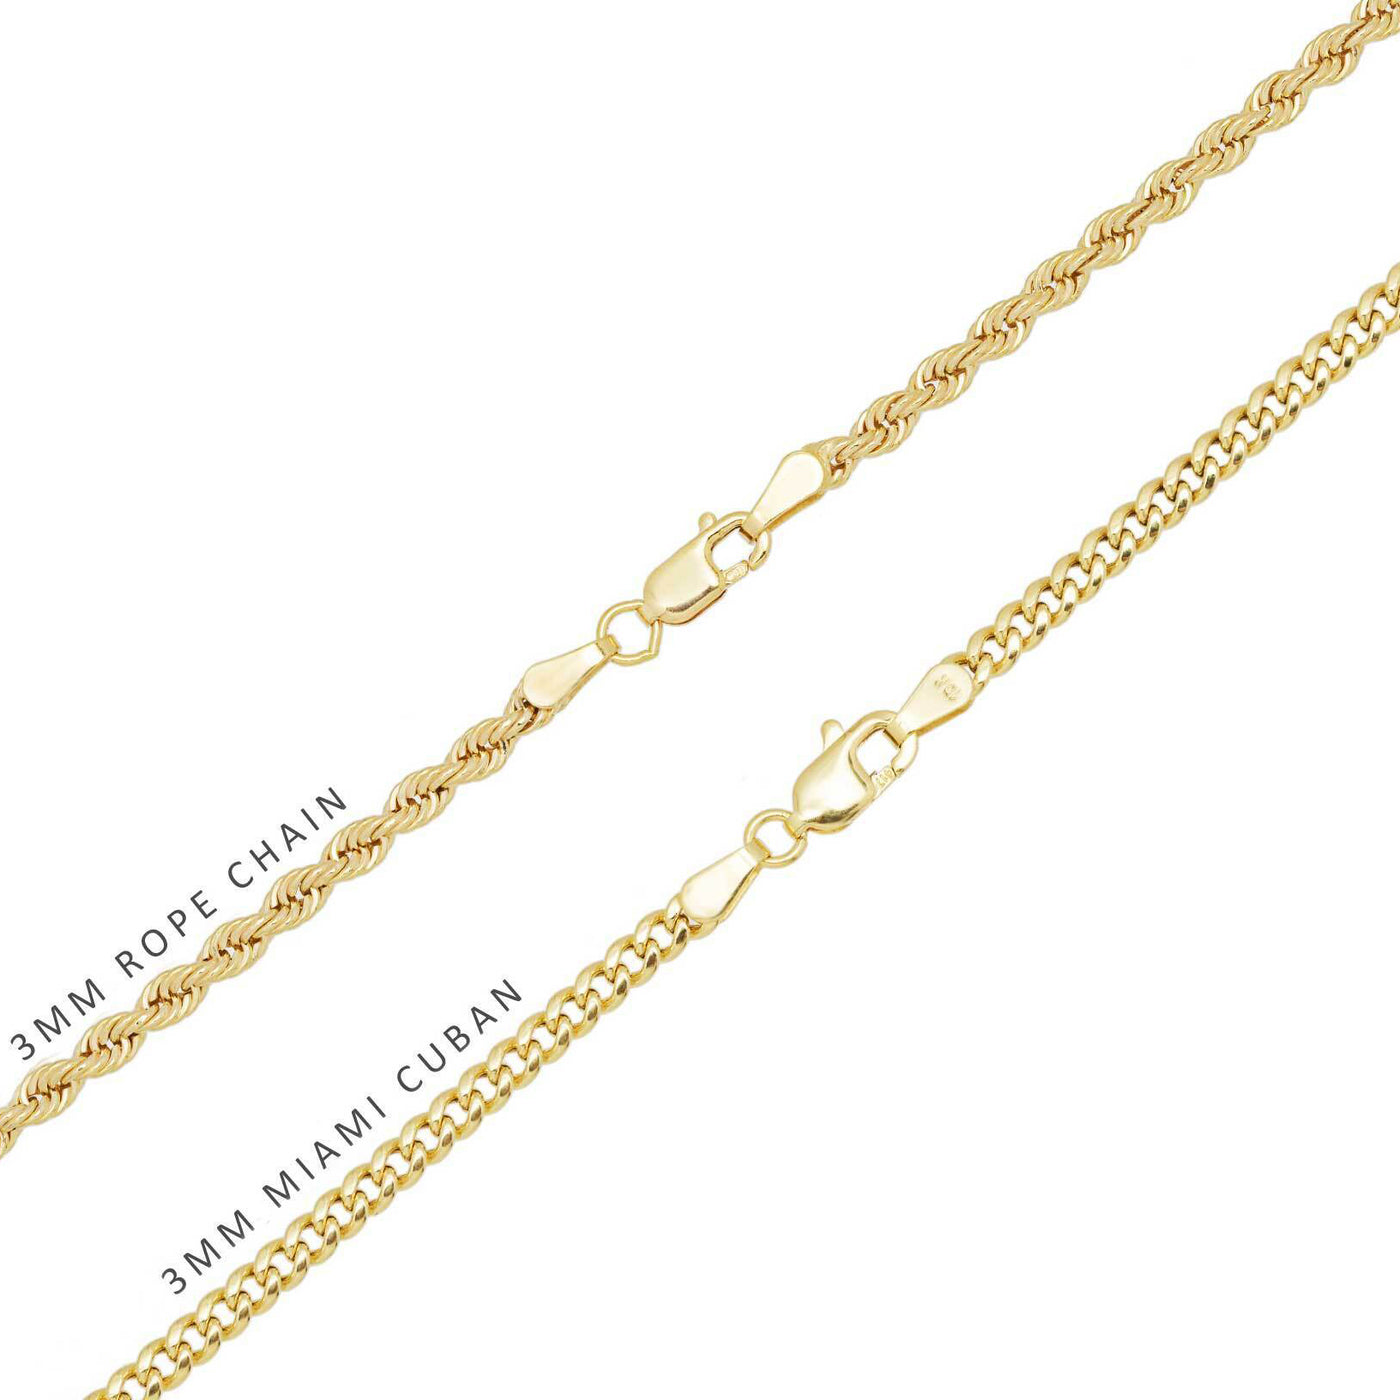 1.5" Saint Barbara Round Medallion Ruby Pendant & Chain Necklace Set 10K Yellow Gold